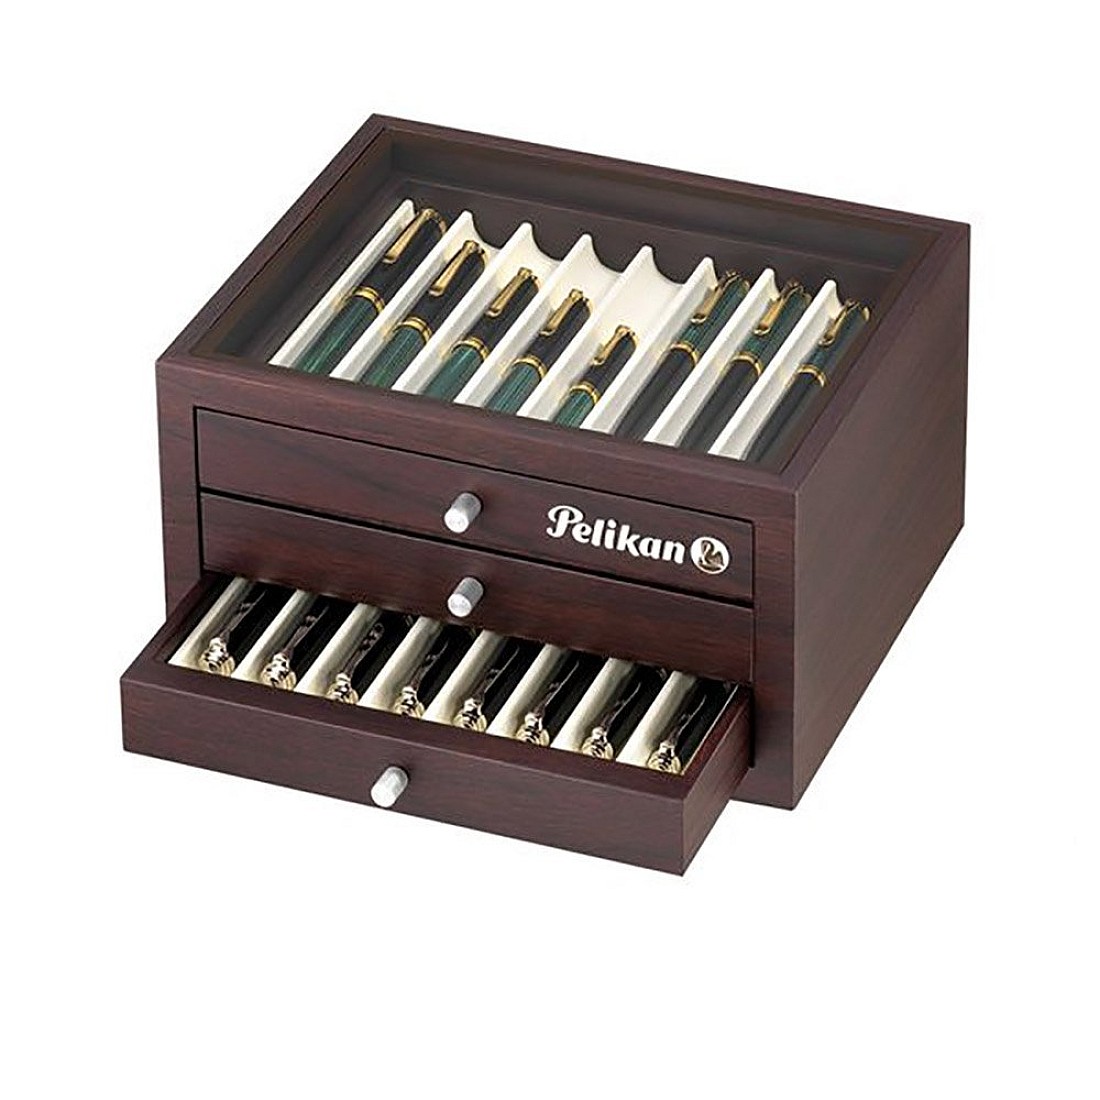 Pelikan Collector's Box (24 pens)